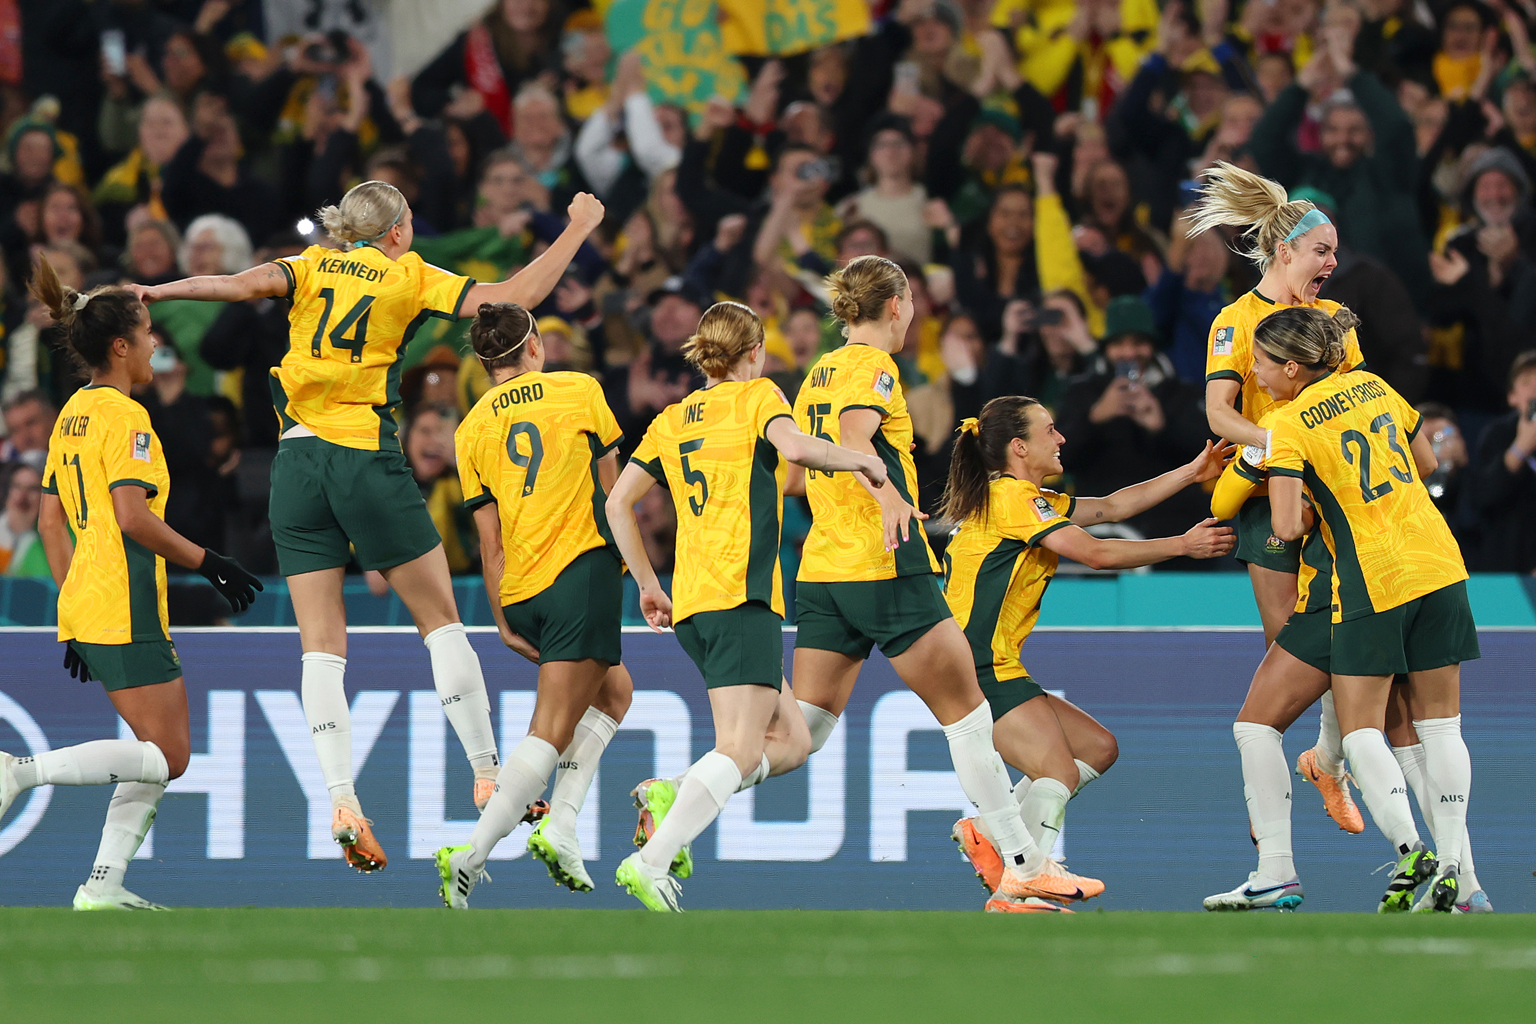 Australian womens soccer players celebrate on the field